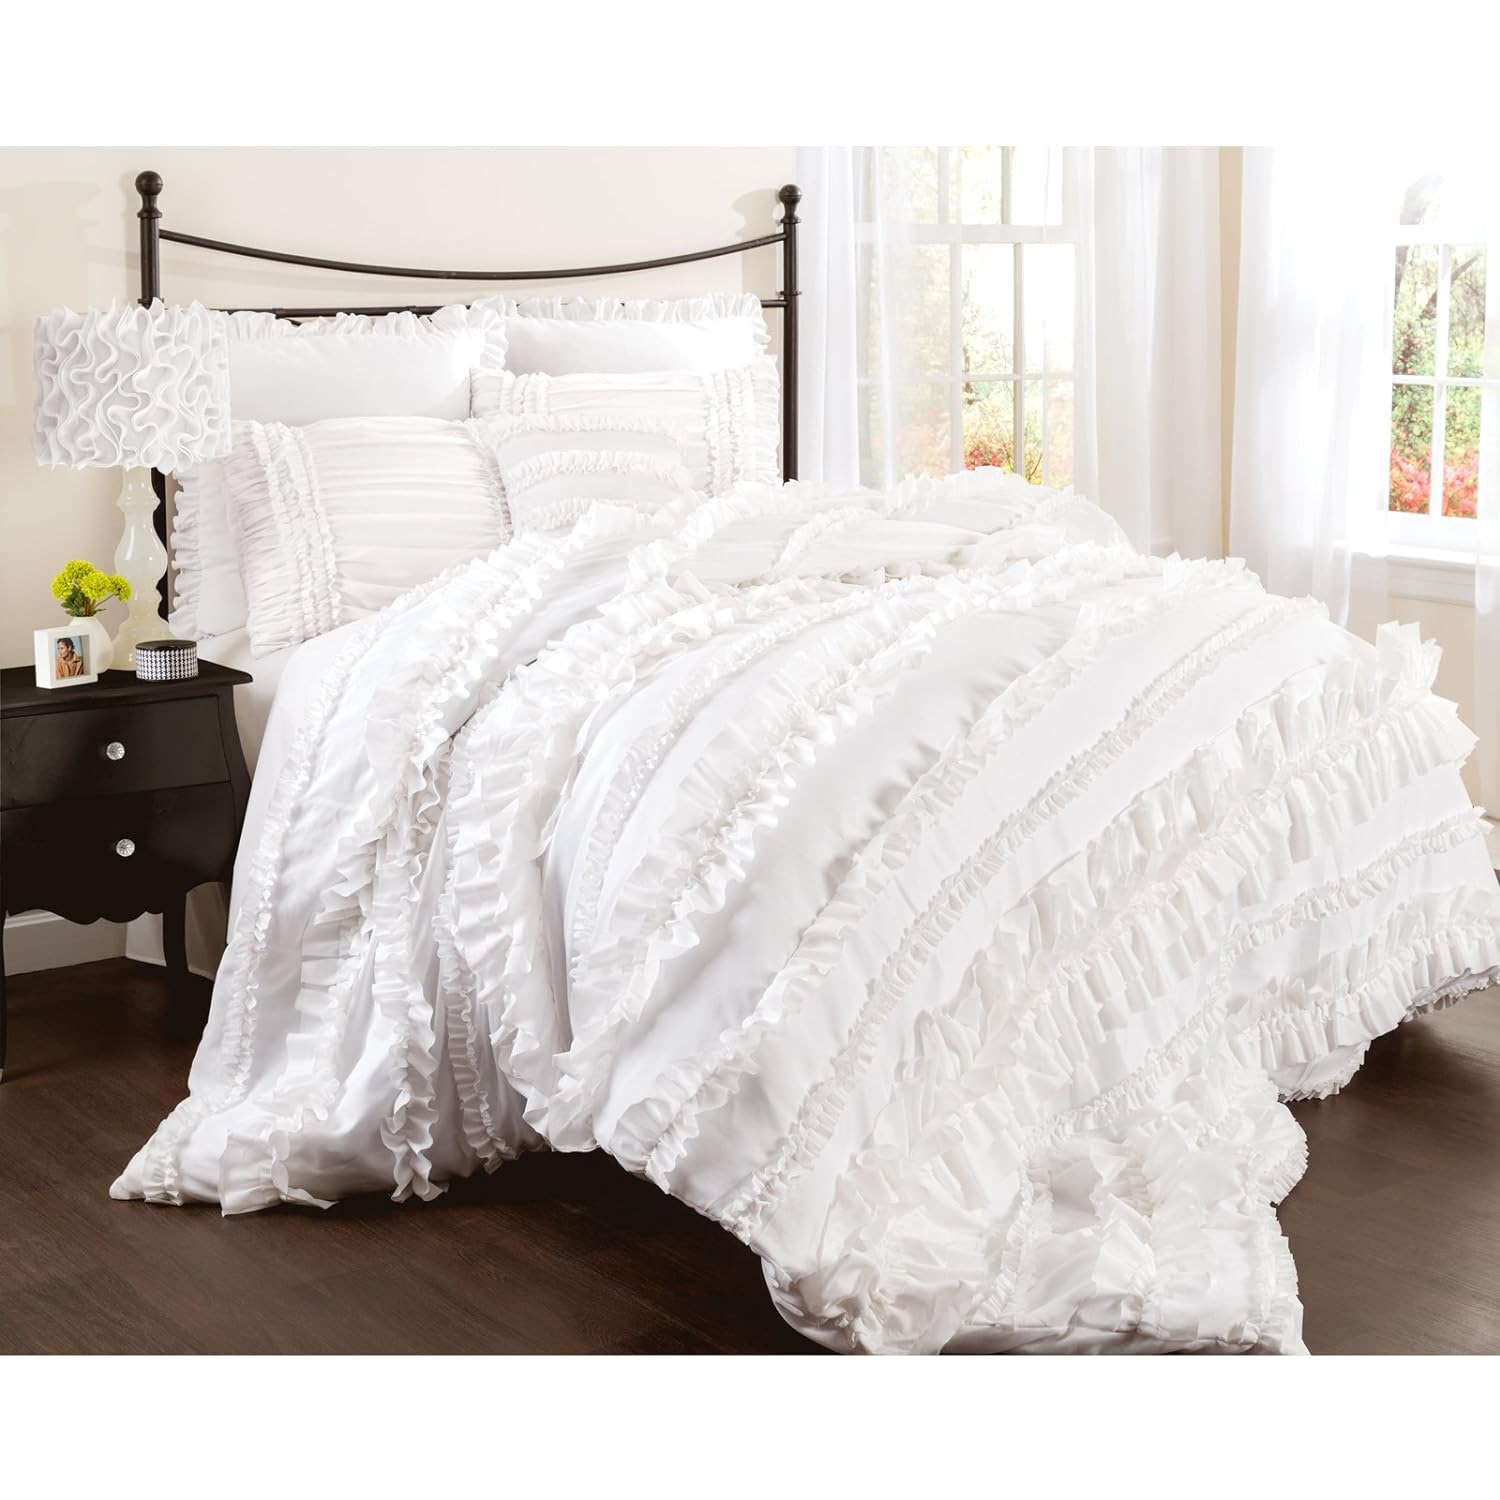 ... Ruffle Bedding Set: Lush Decor Belle 4-Piece Comforter Set White or